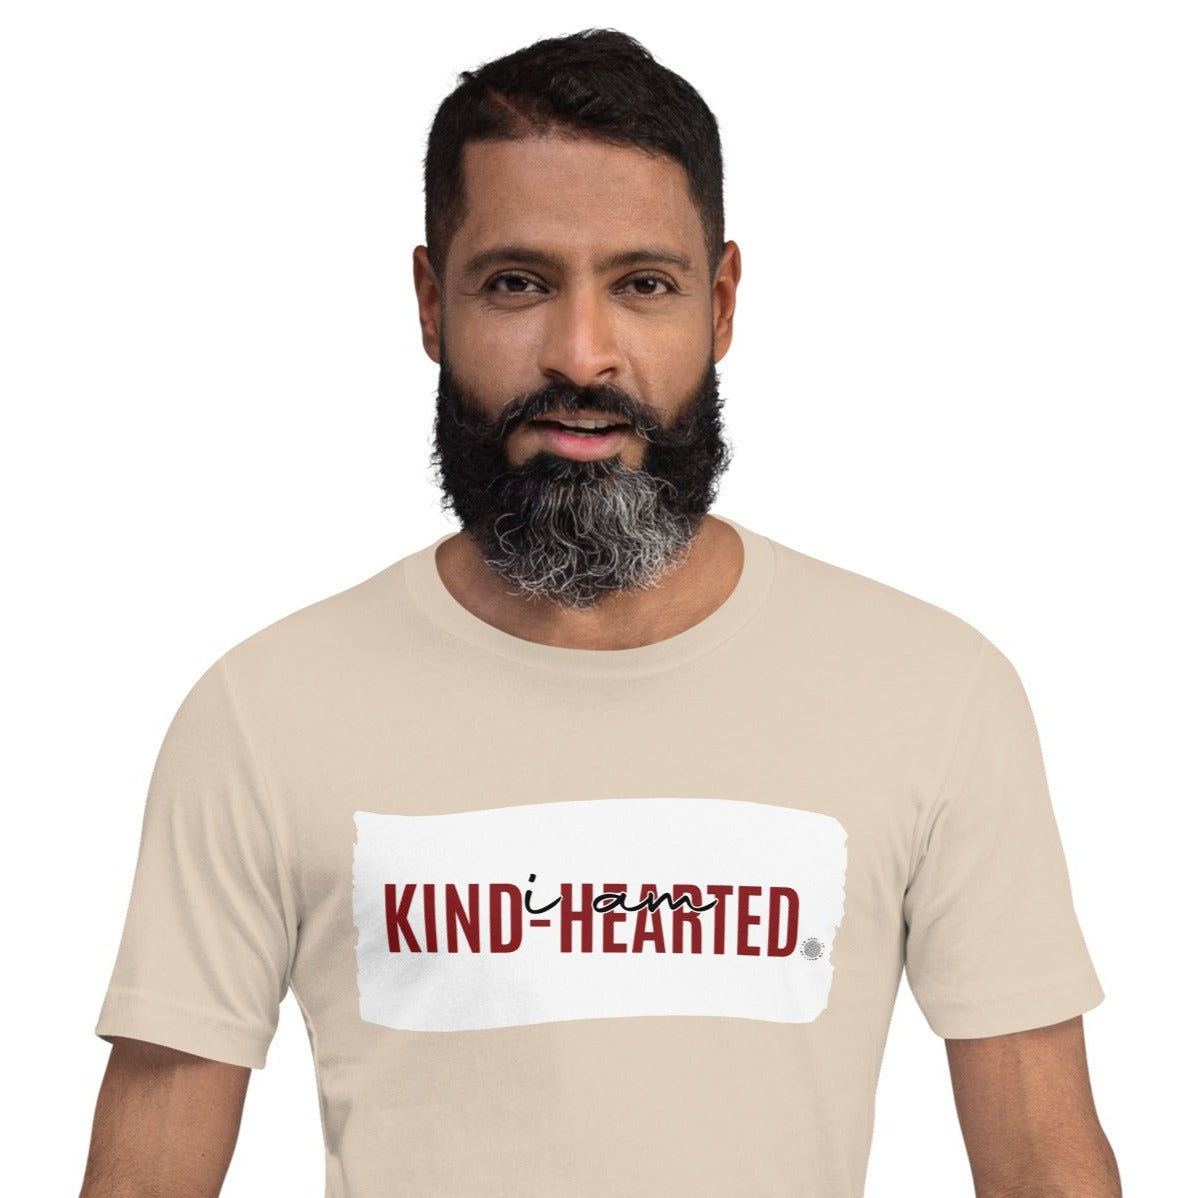 I Am Kind-Hearted Adult Unisex T-Shirt tan